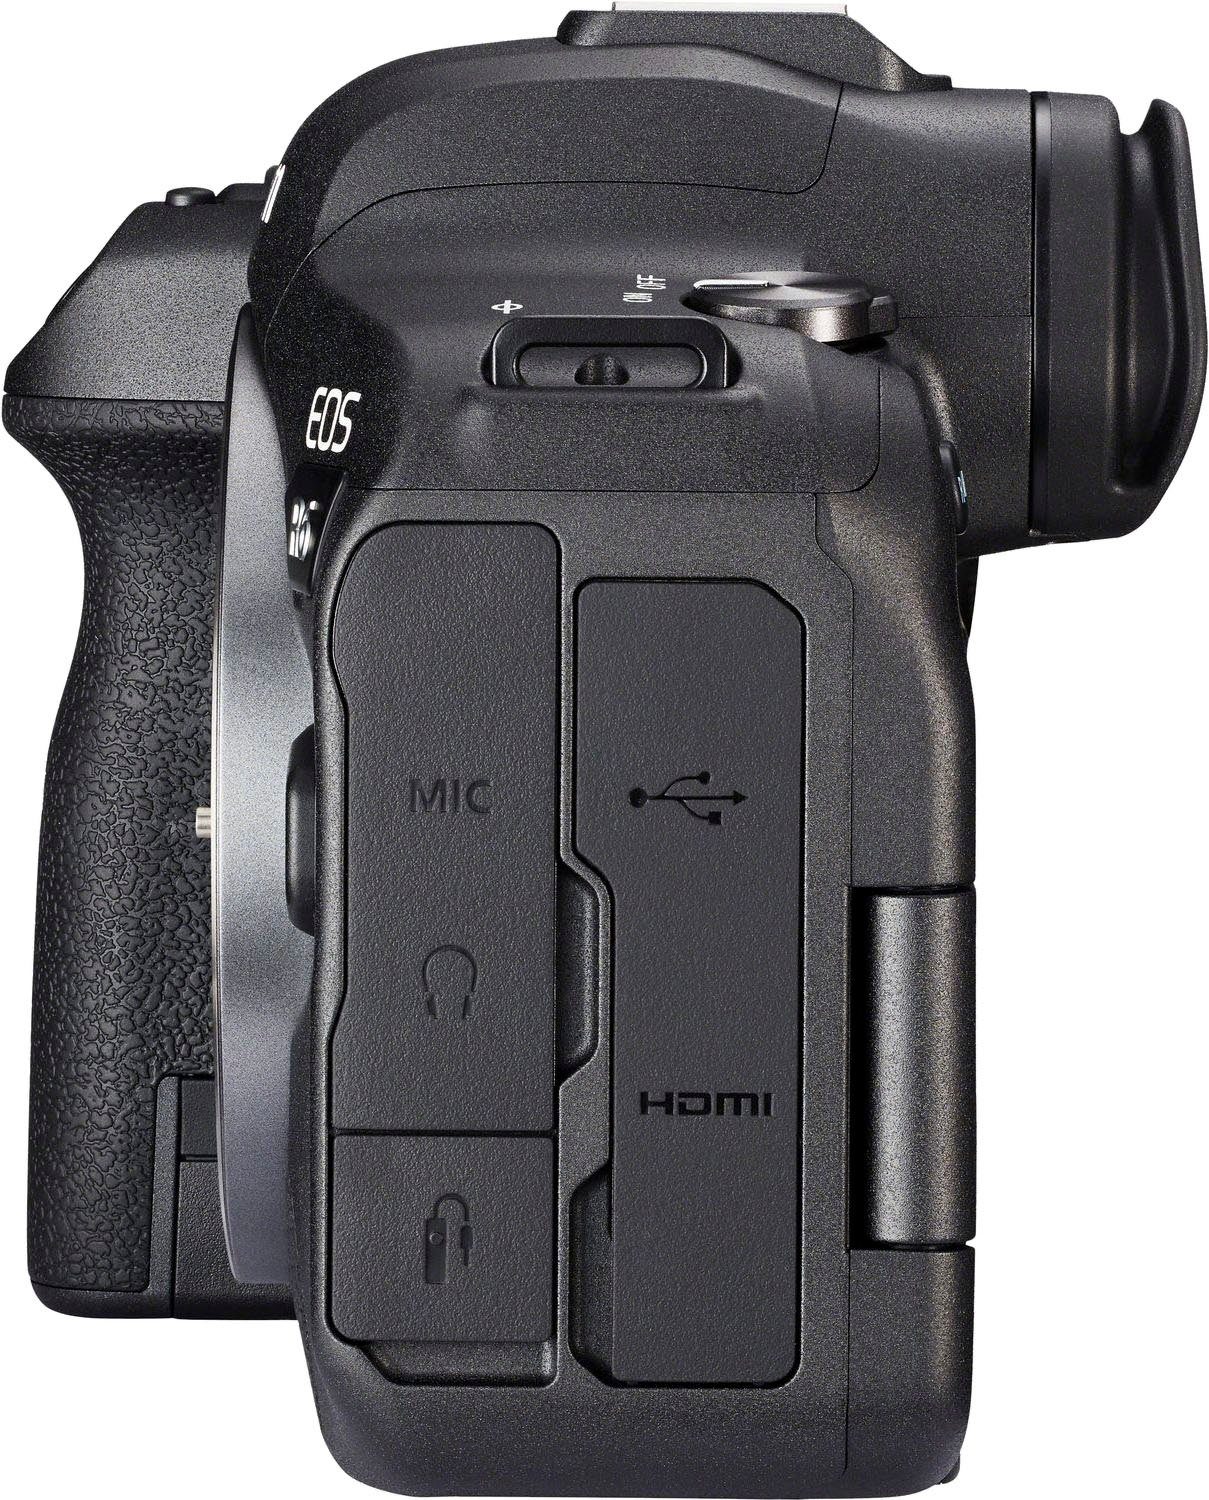 Canon EOS R6 (WiFi) (20,1 Bluetooth, Systemkamera Body (Gehäuse) MP, WLAN